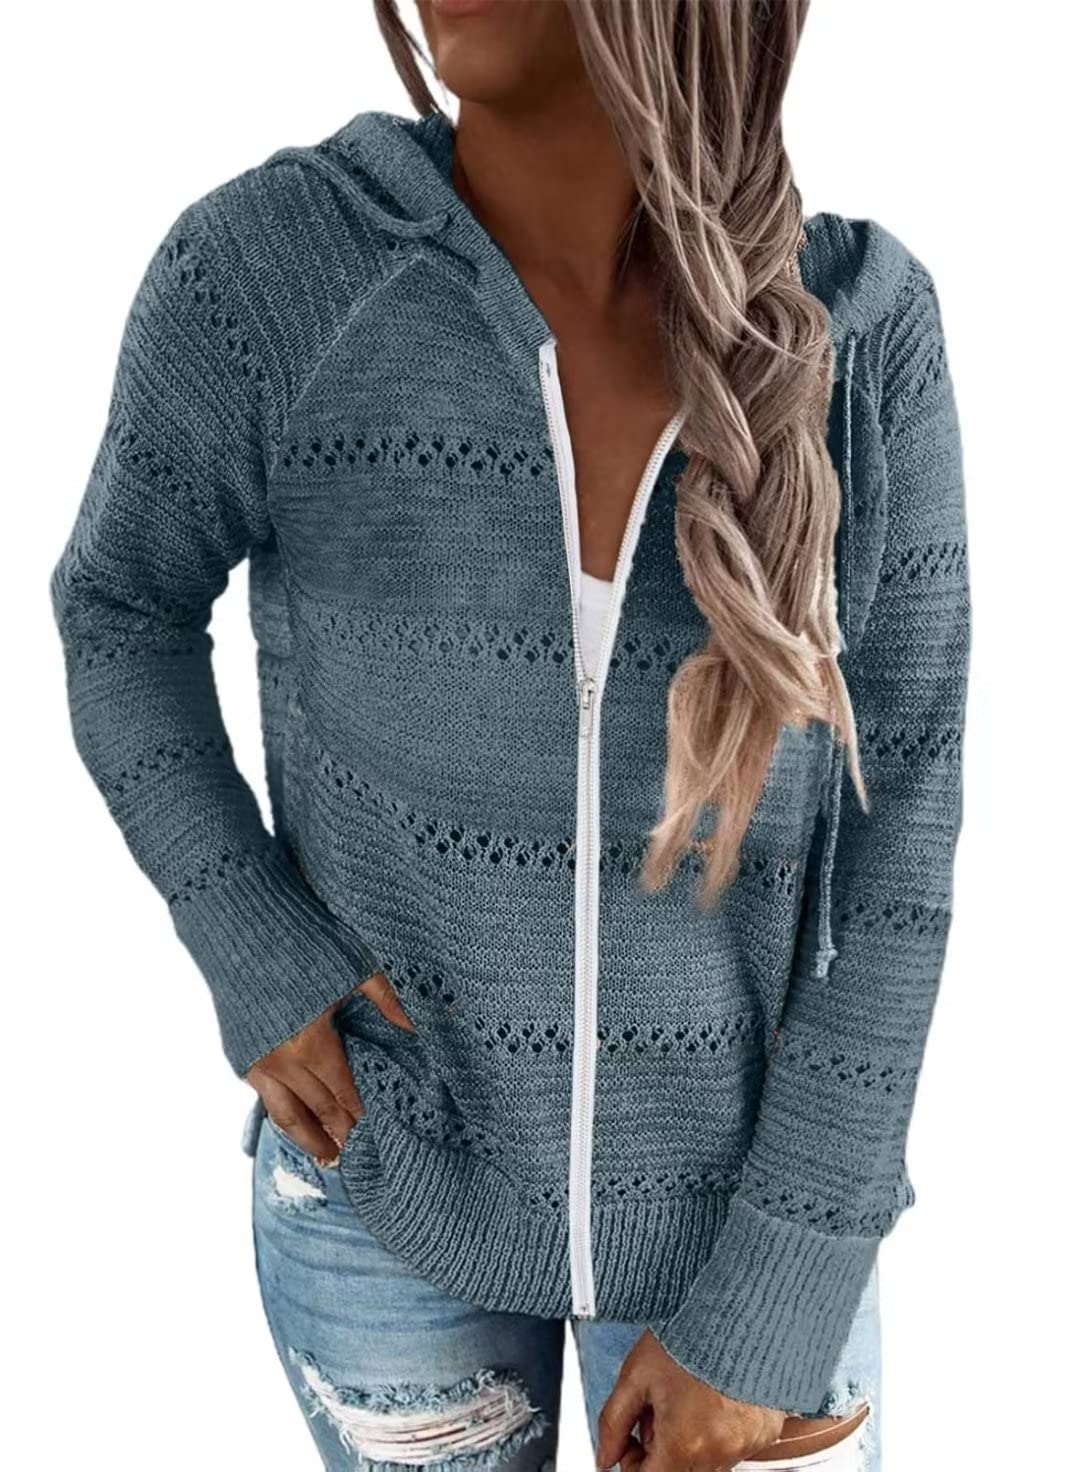 FEKOAFE Sweatshirt for Women Light Jackets for Women Hoodies for Teen girls Blue XX-Large